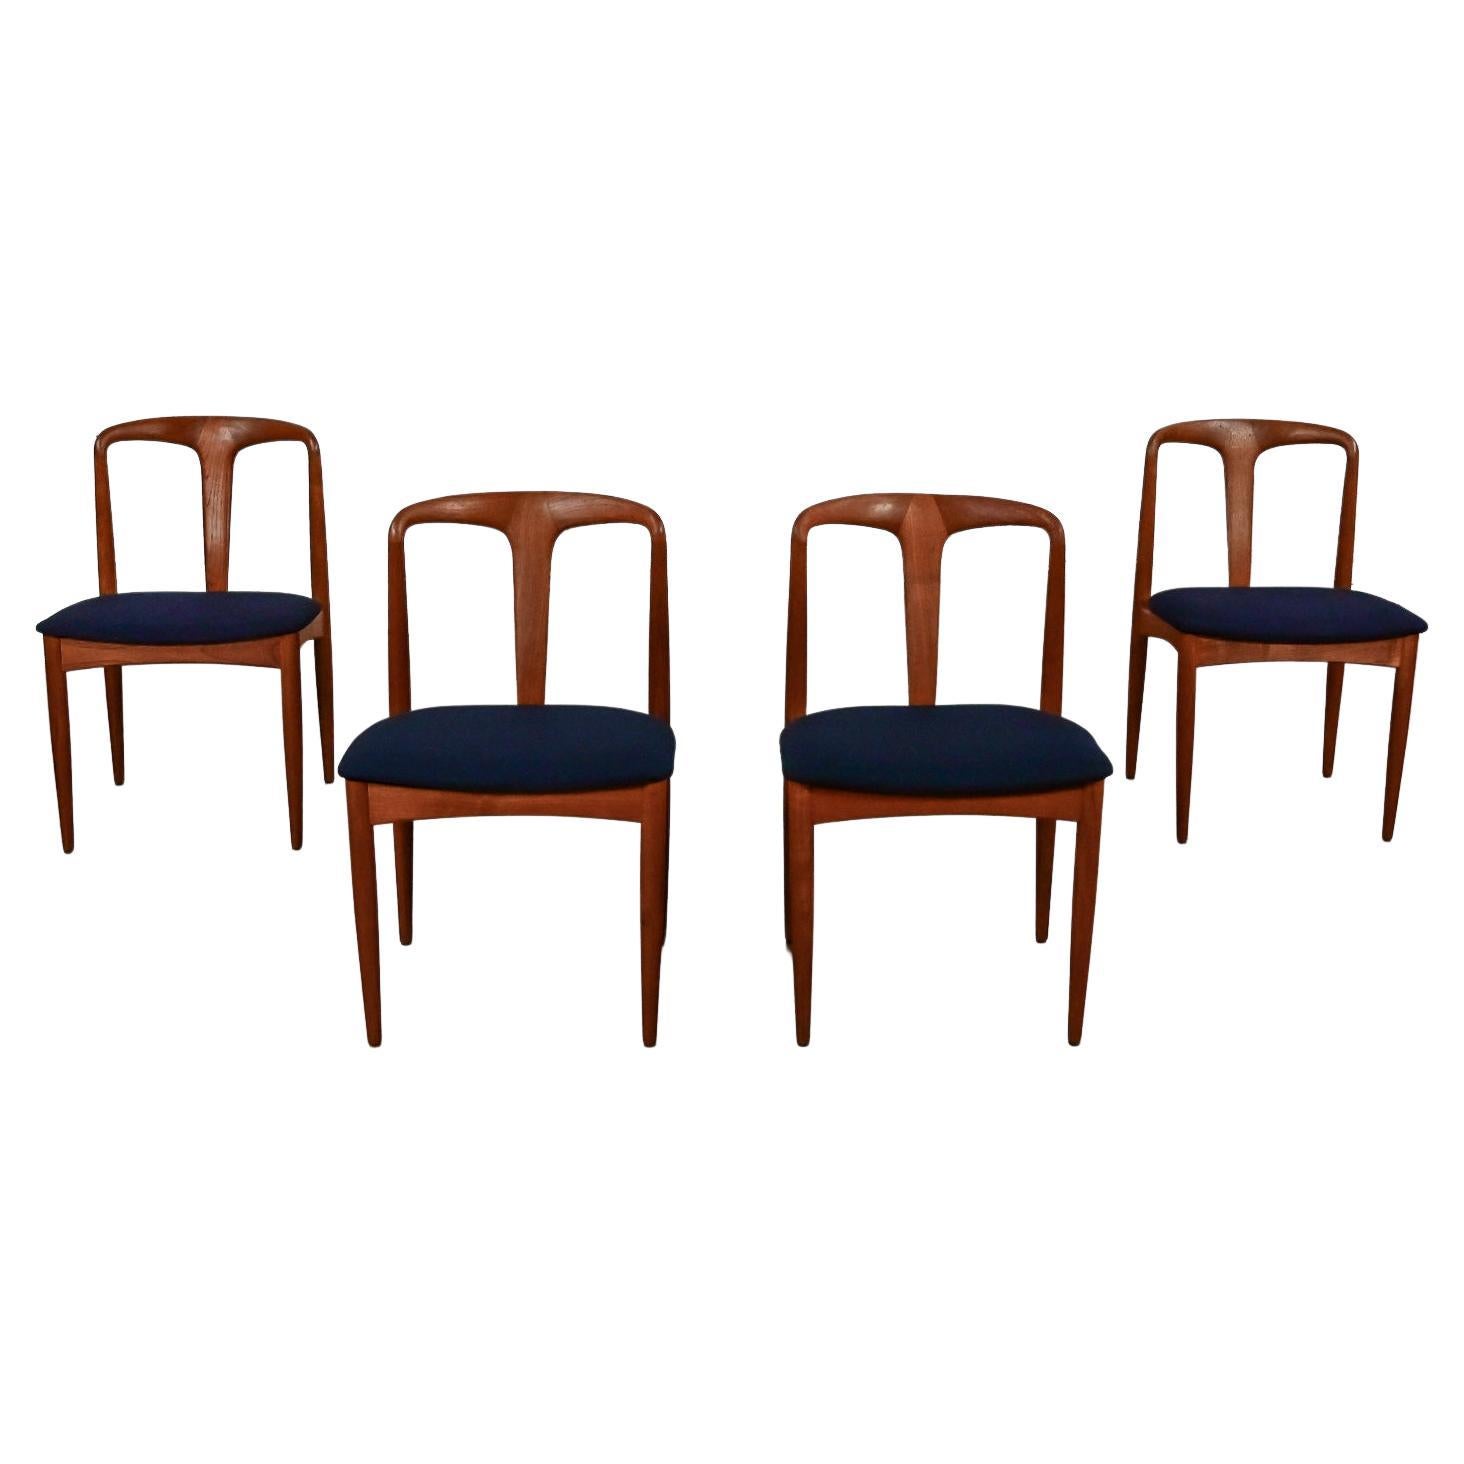 4 Scandinavian Modern Teak Juliane Dining Chairs Attributed to Johannes Andersen